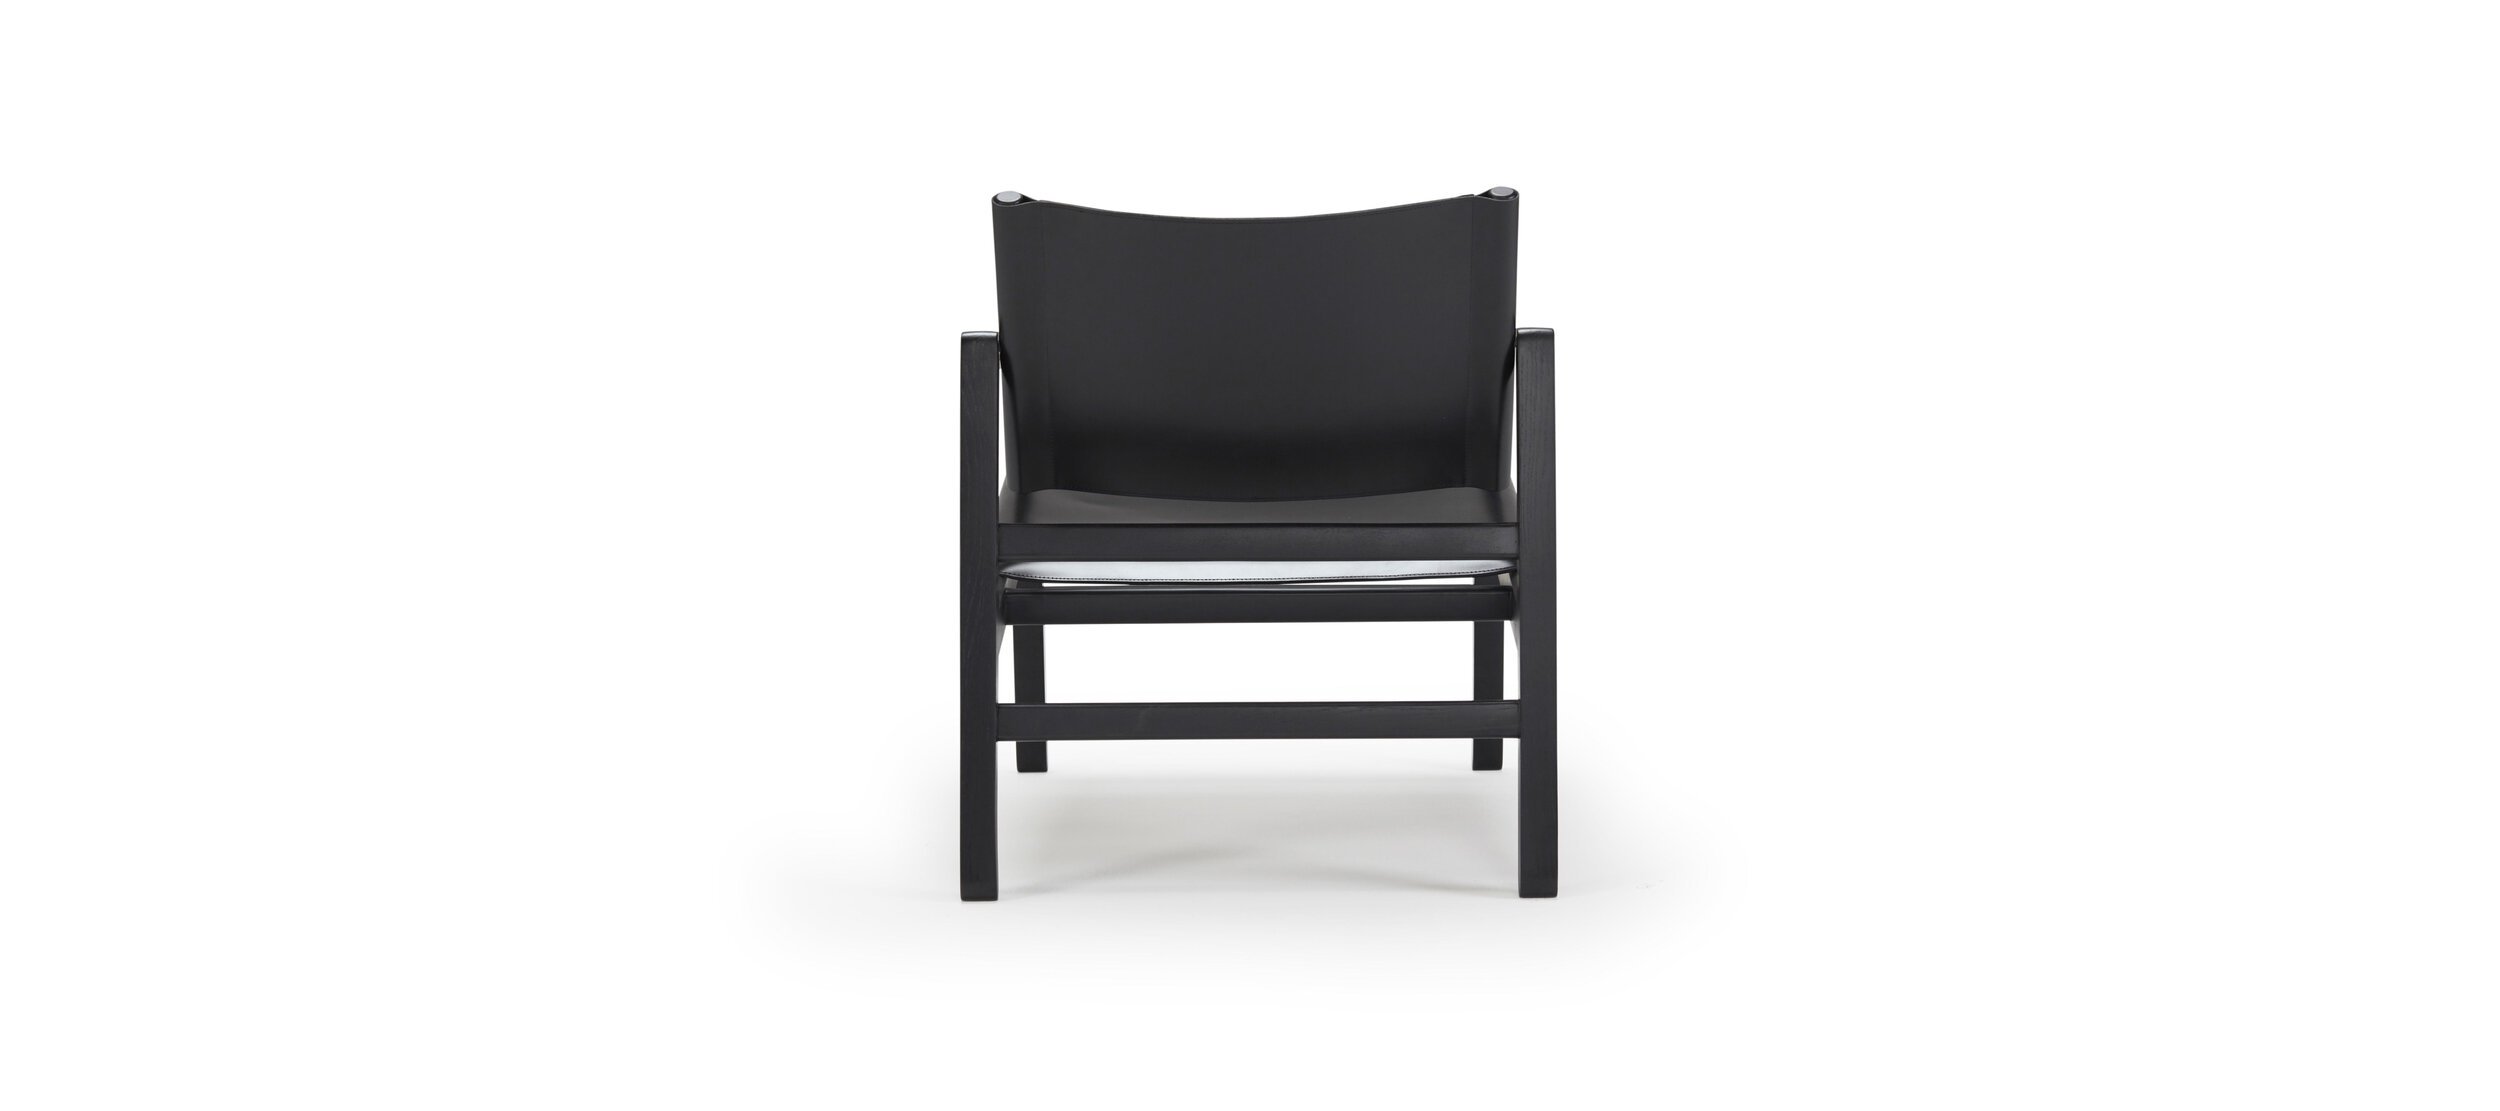 K410-chair-arms-800-black-p3.jpg